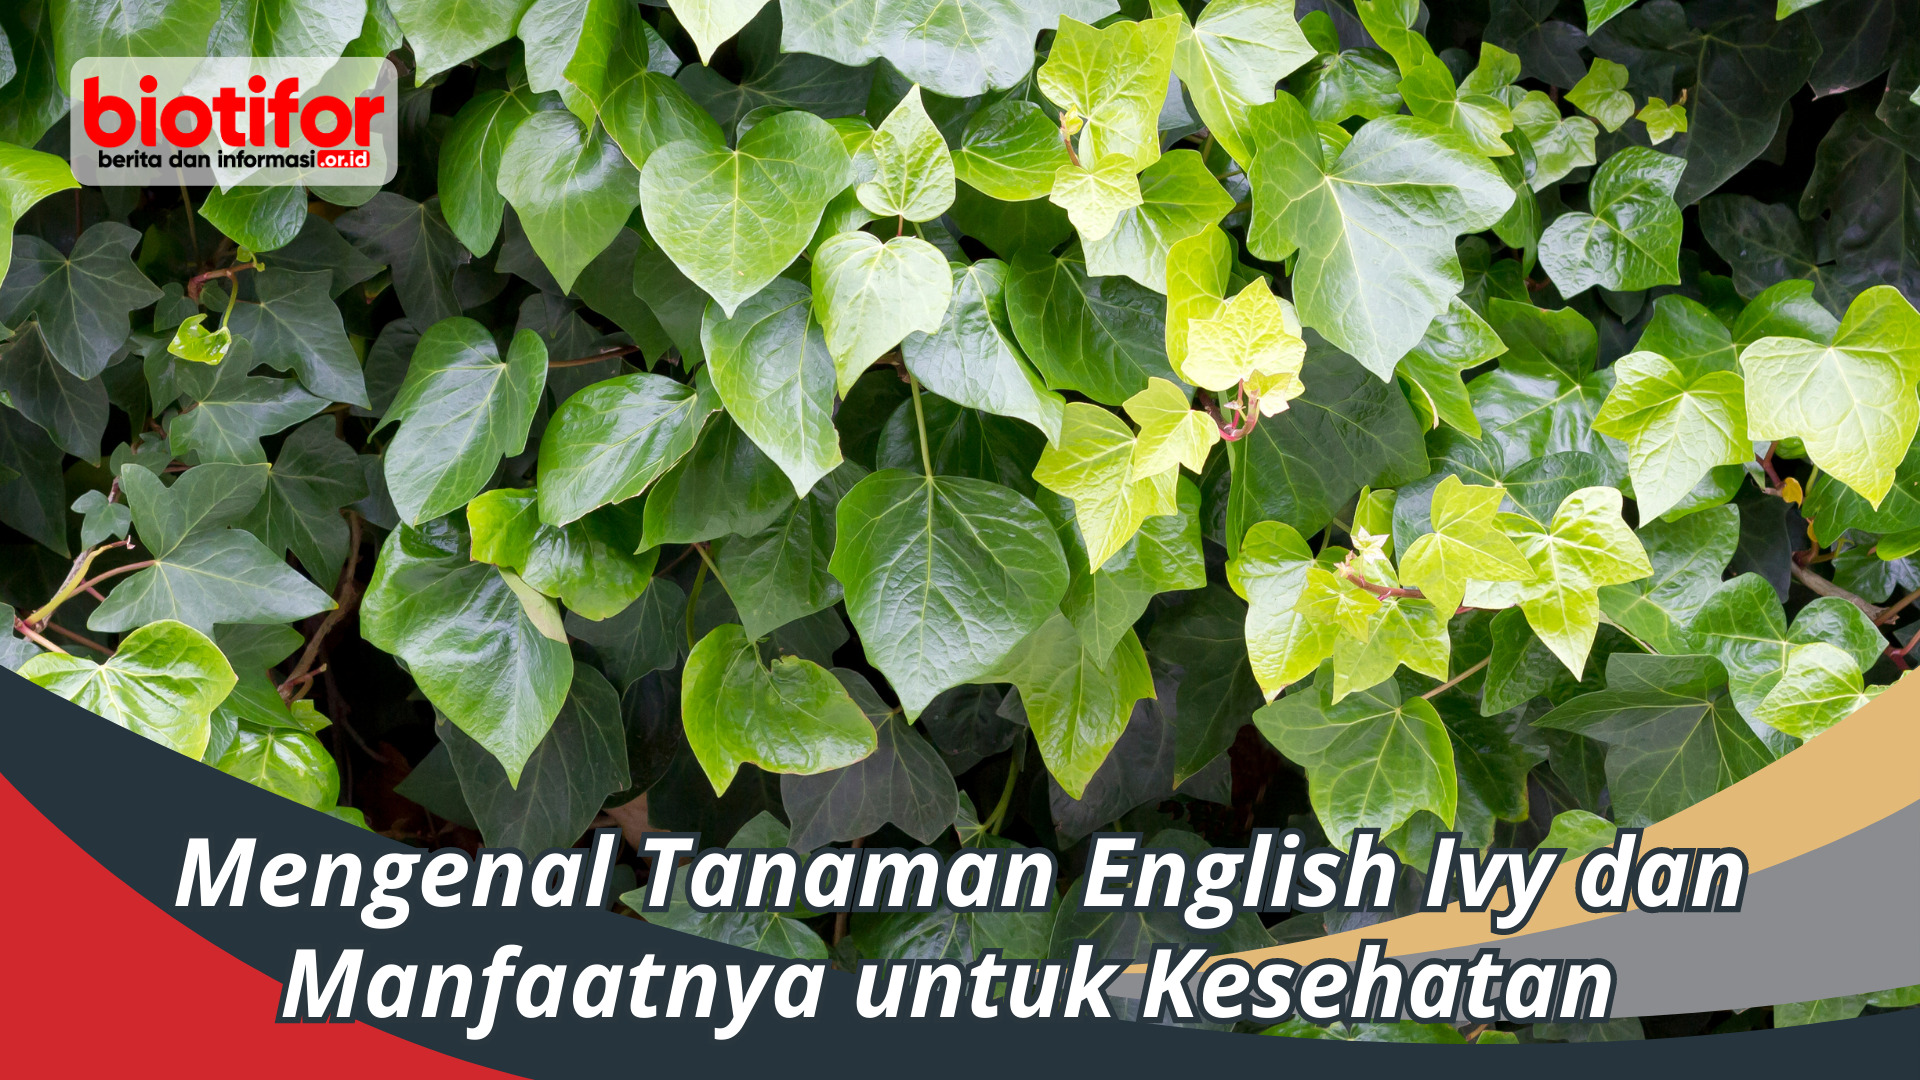 Tanaman English Ivy